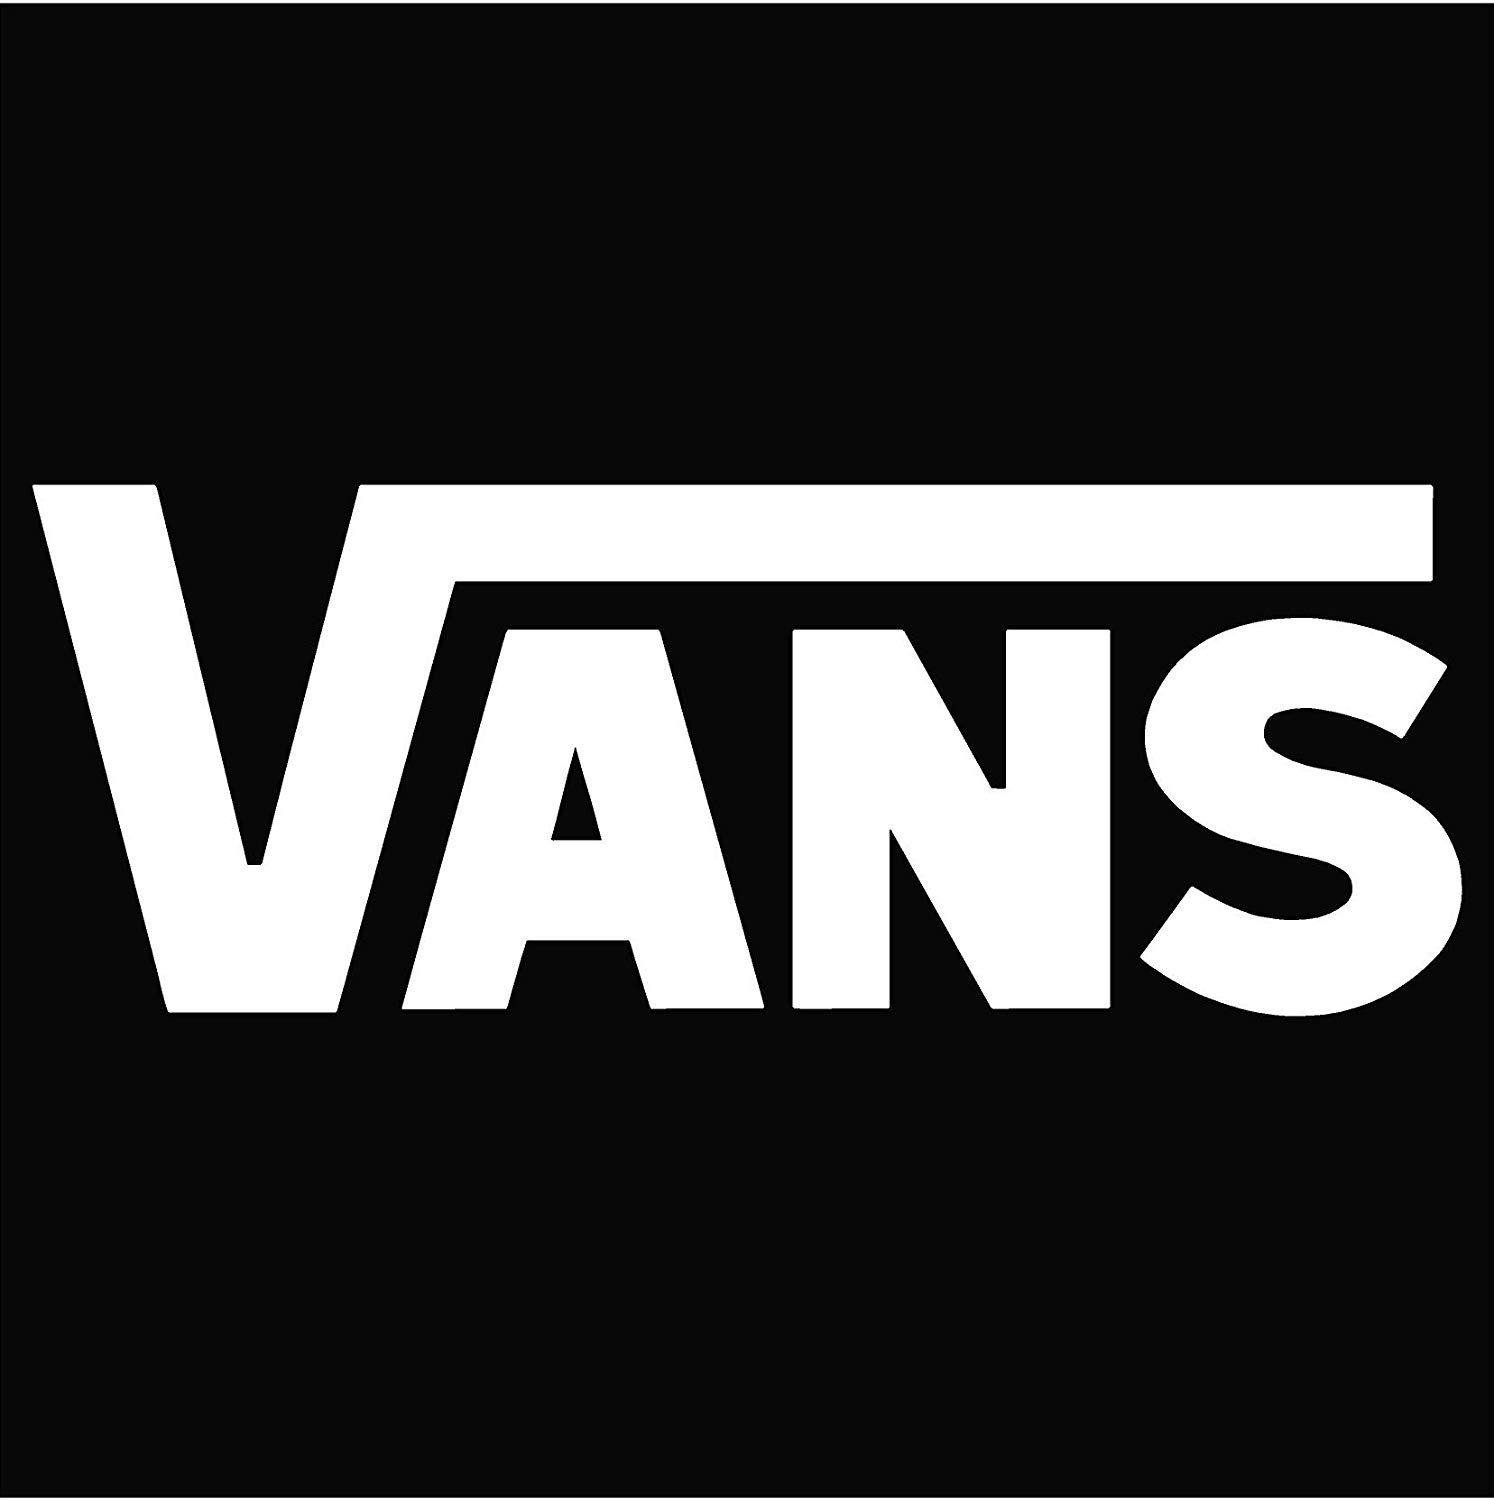 Vans Brand Logo - Amazon.com: Vans Logo Vinyl Sticker Decal Decal-White-6 Inch: Automotive